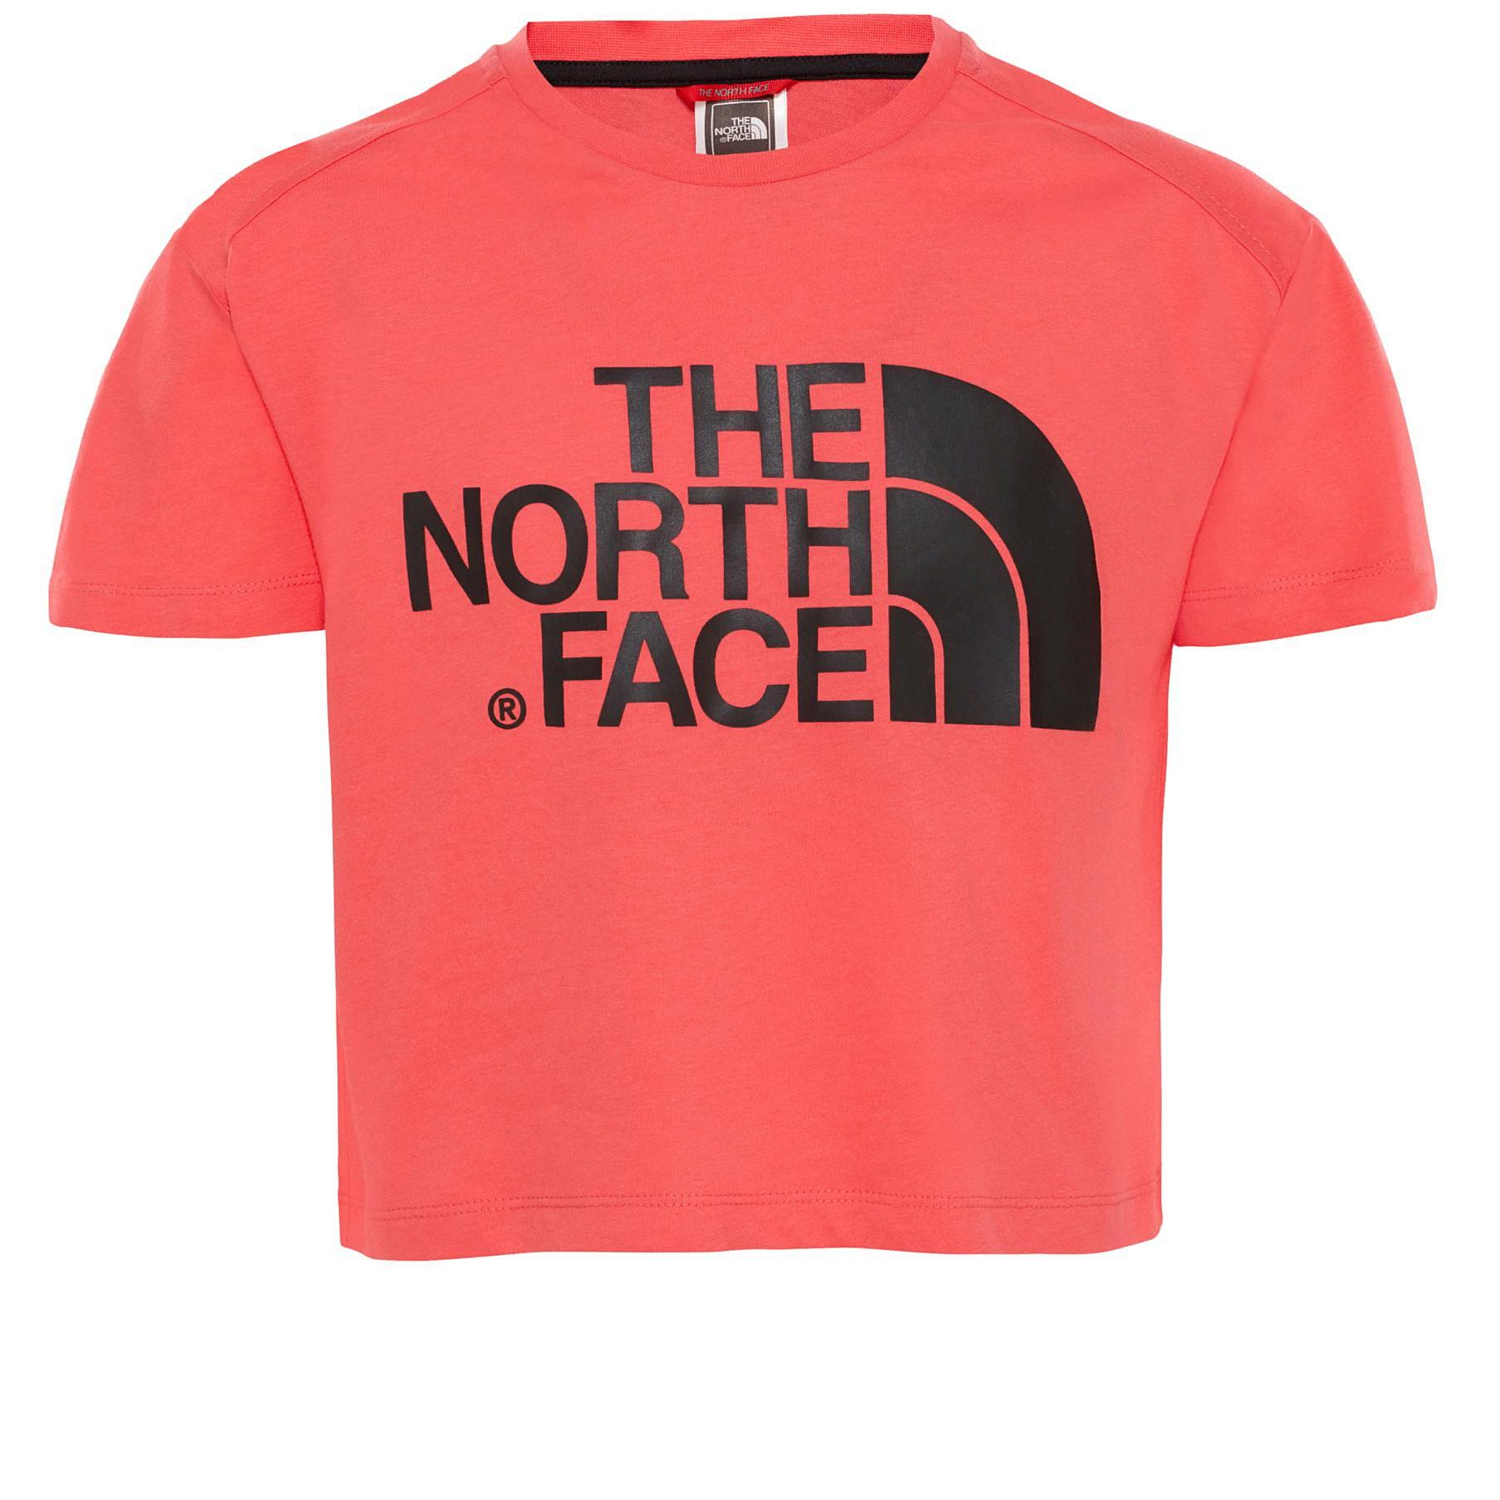 Футболка для активного отдыха The North Face 2019 G Cropped S/S Atomic Pink